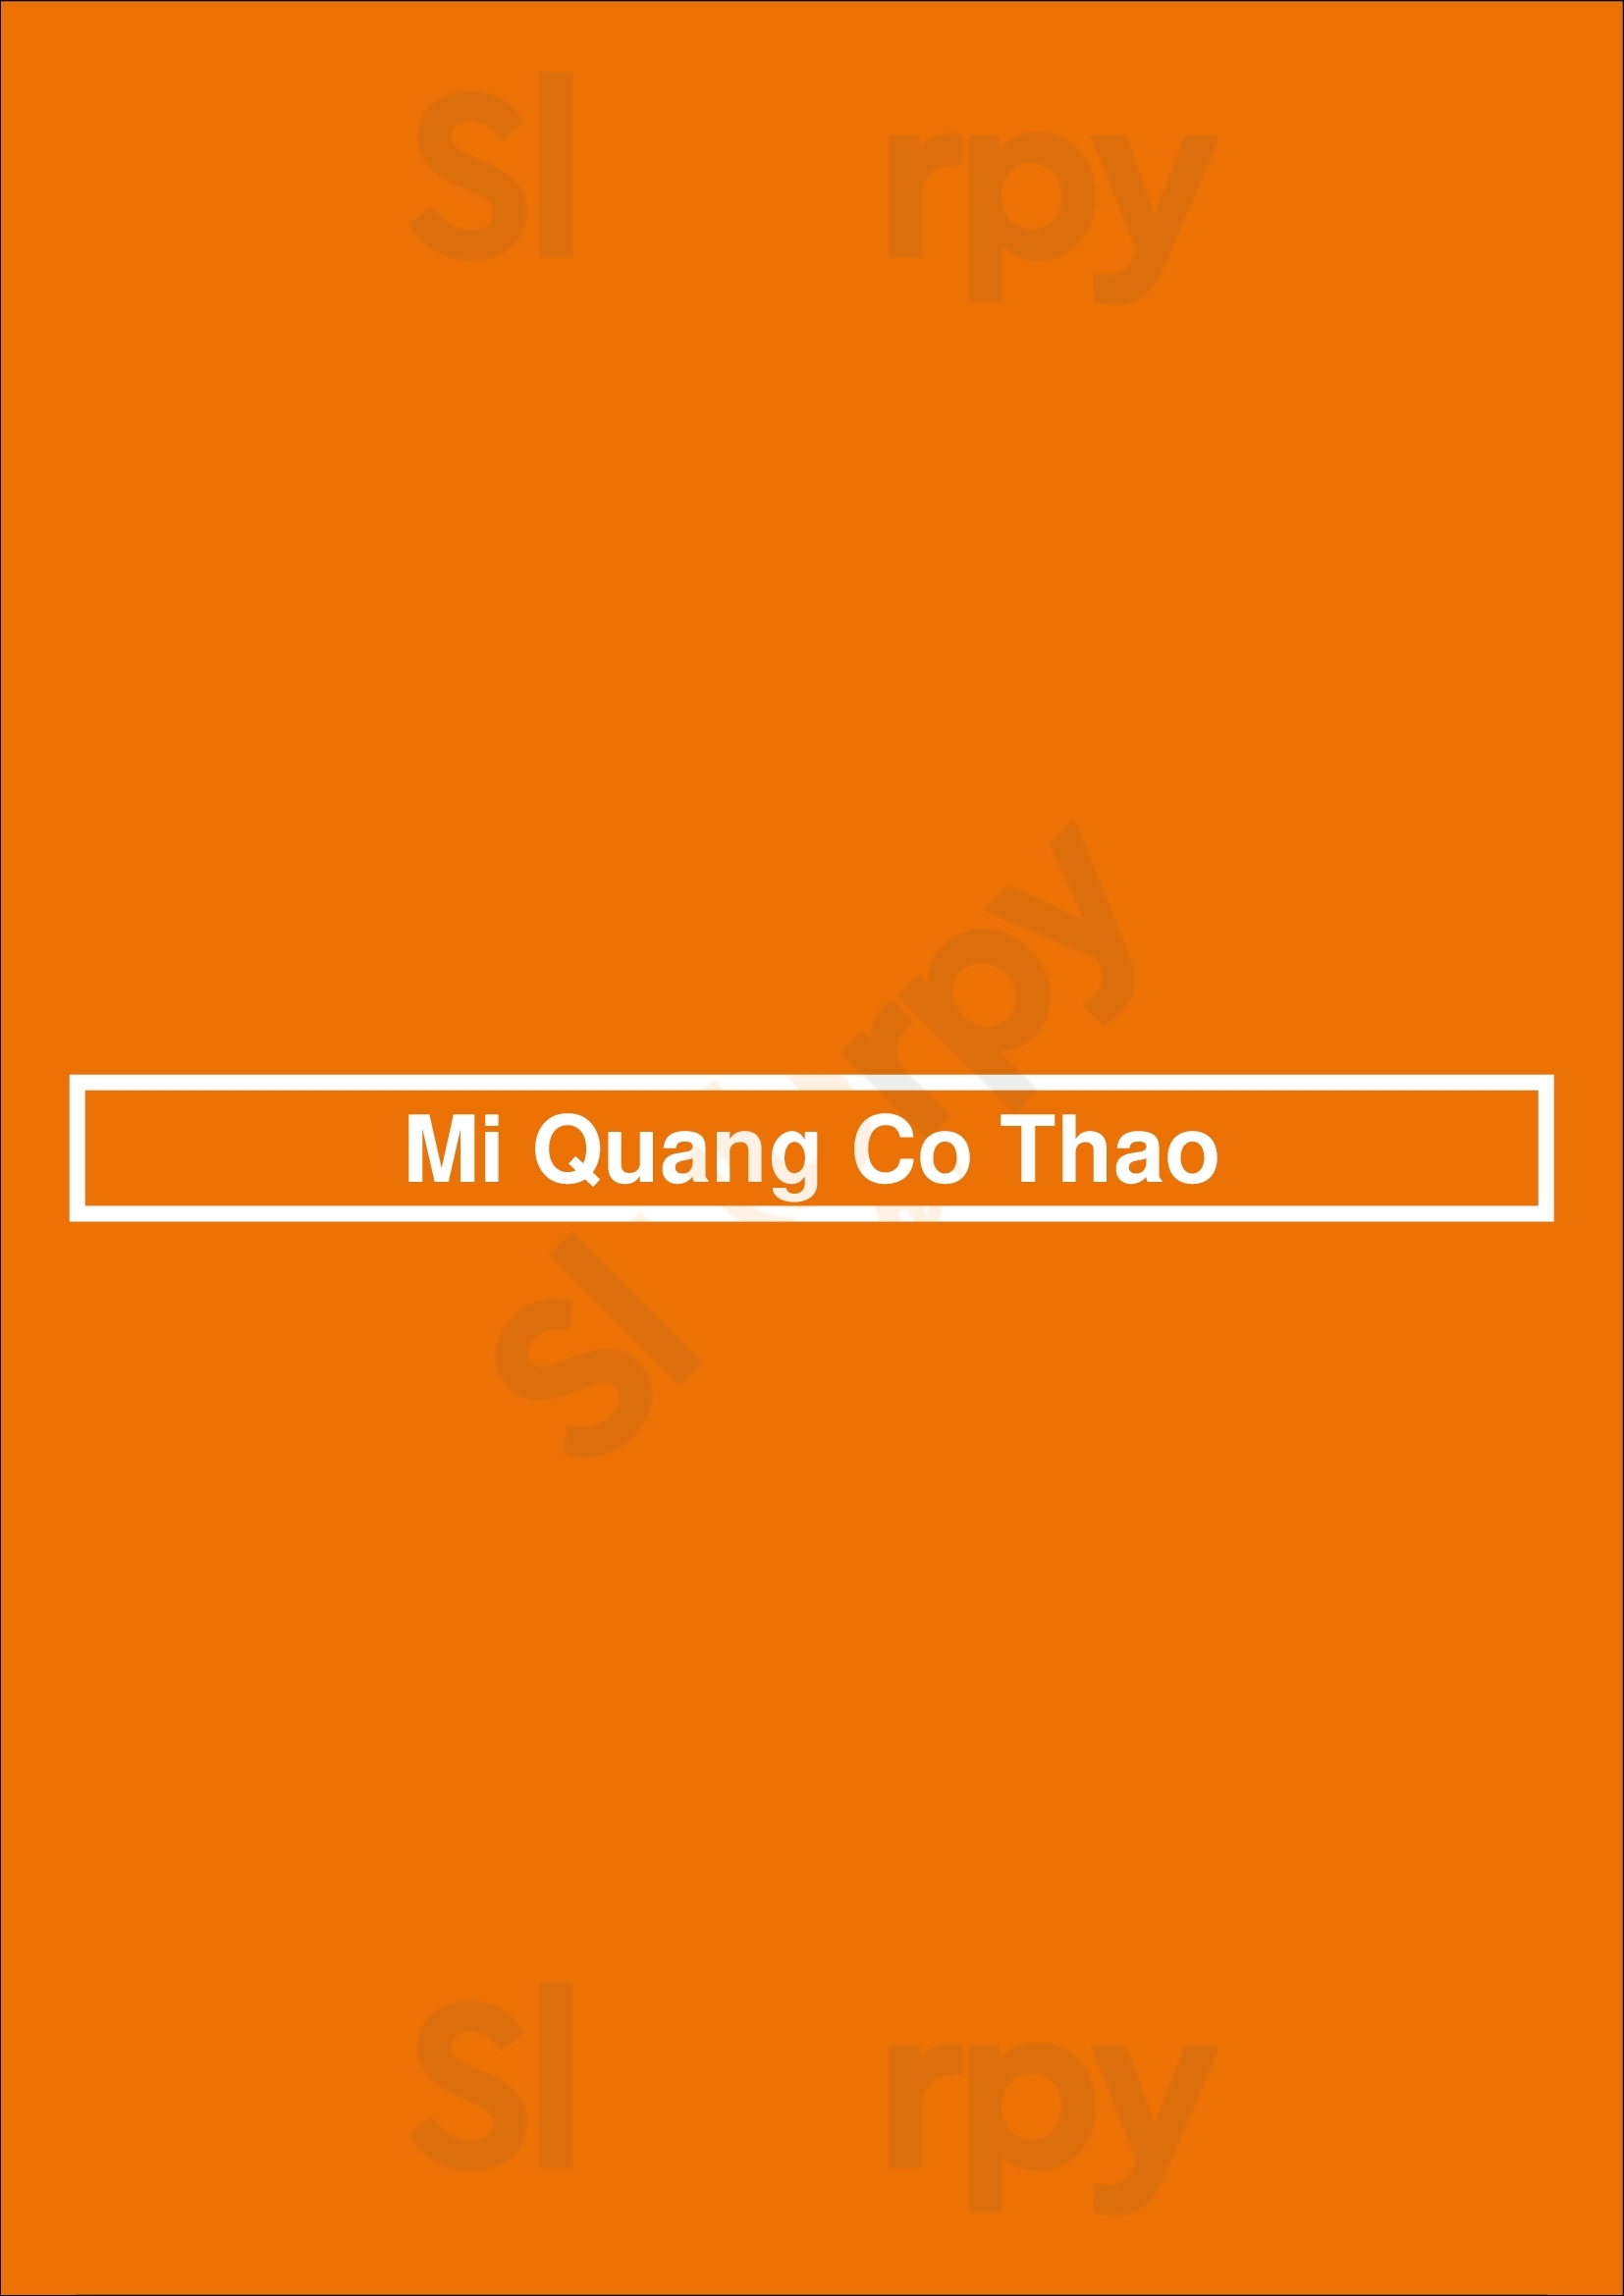 Mi Quang Co Thao San Jose Menu - 1